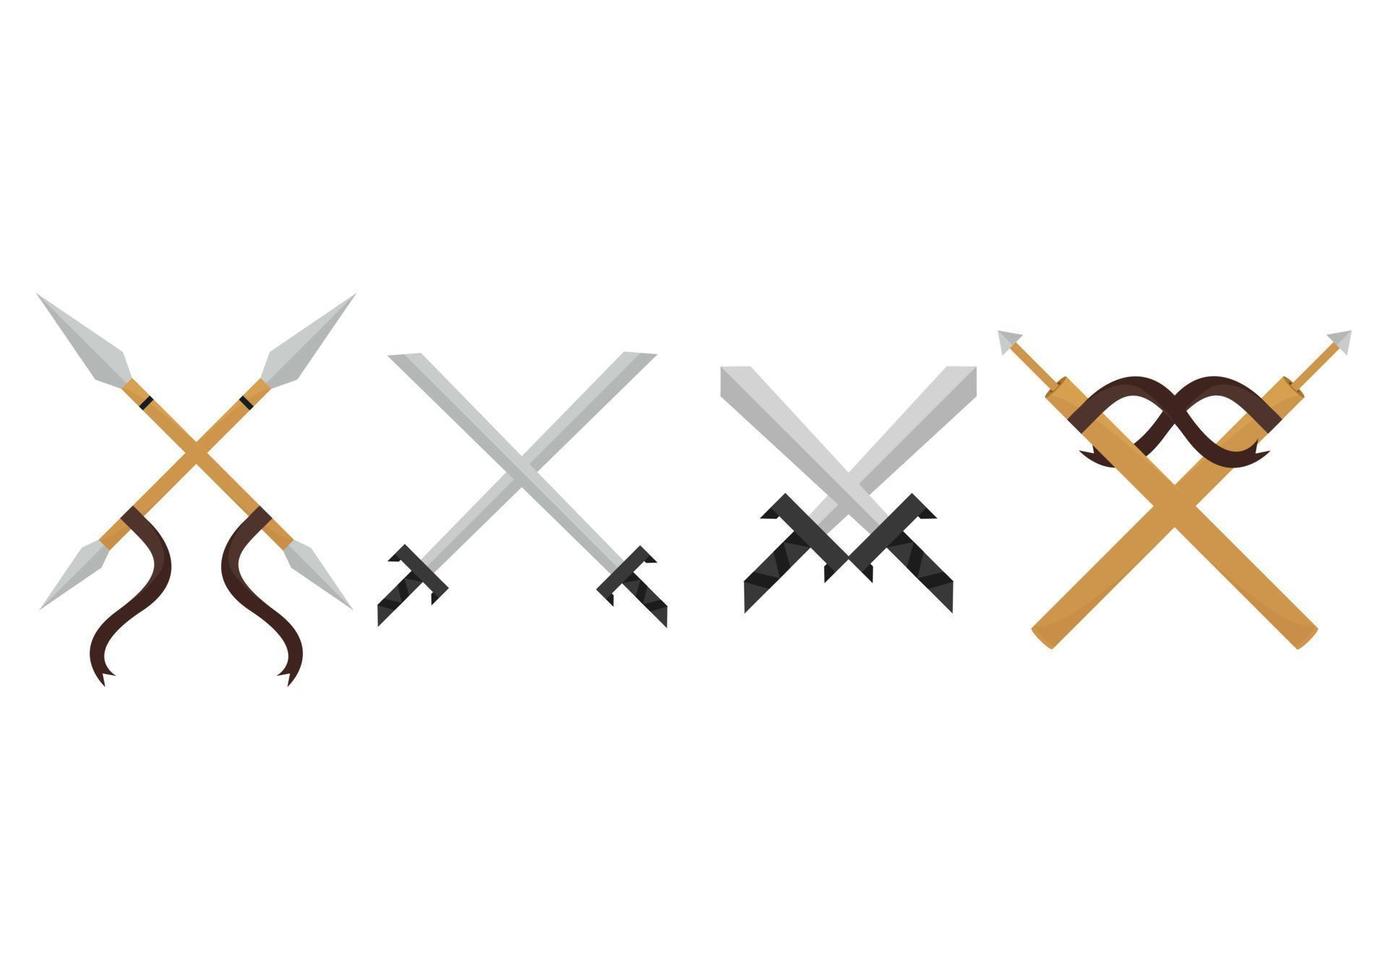 sword, spear and katana illustration vector